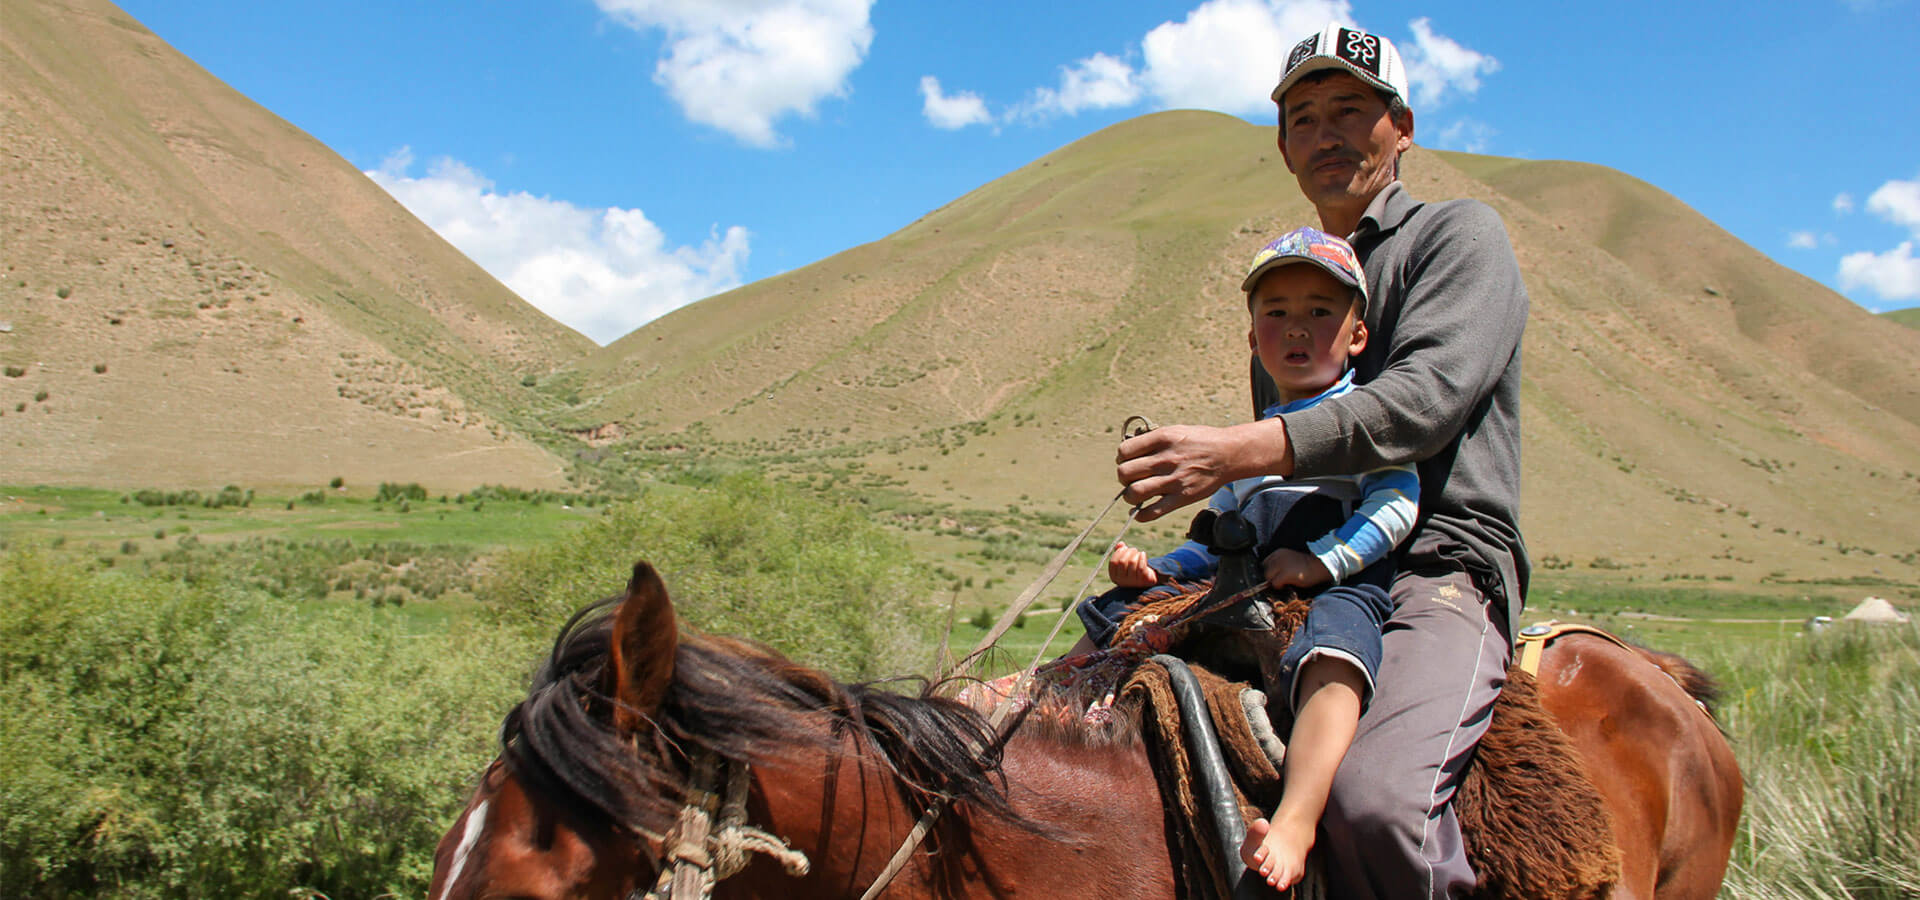 séjours kirghizistan, voyage en famille kirghizie, voyage au kirghizistan, trekking kirghizistan